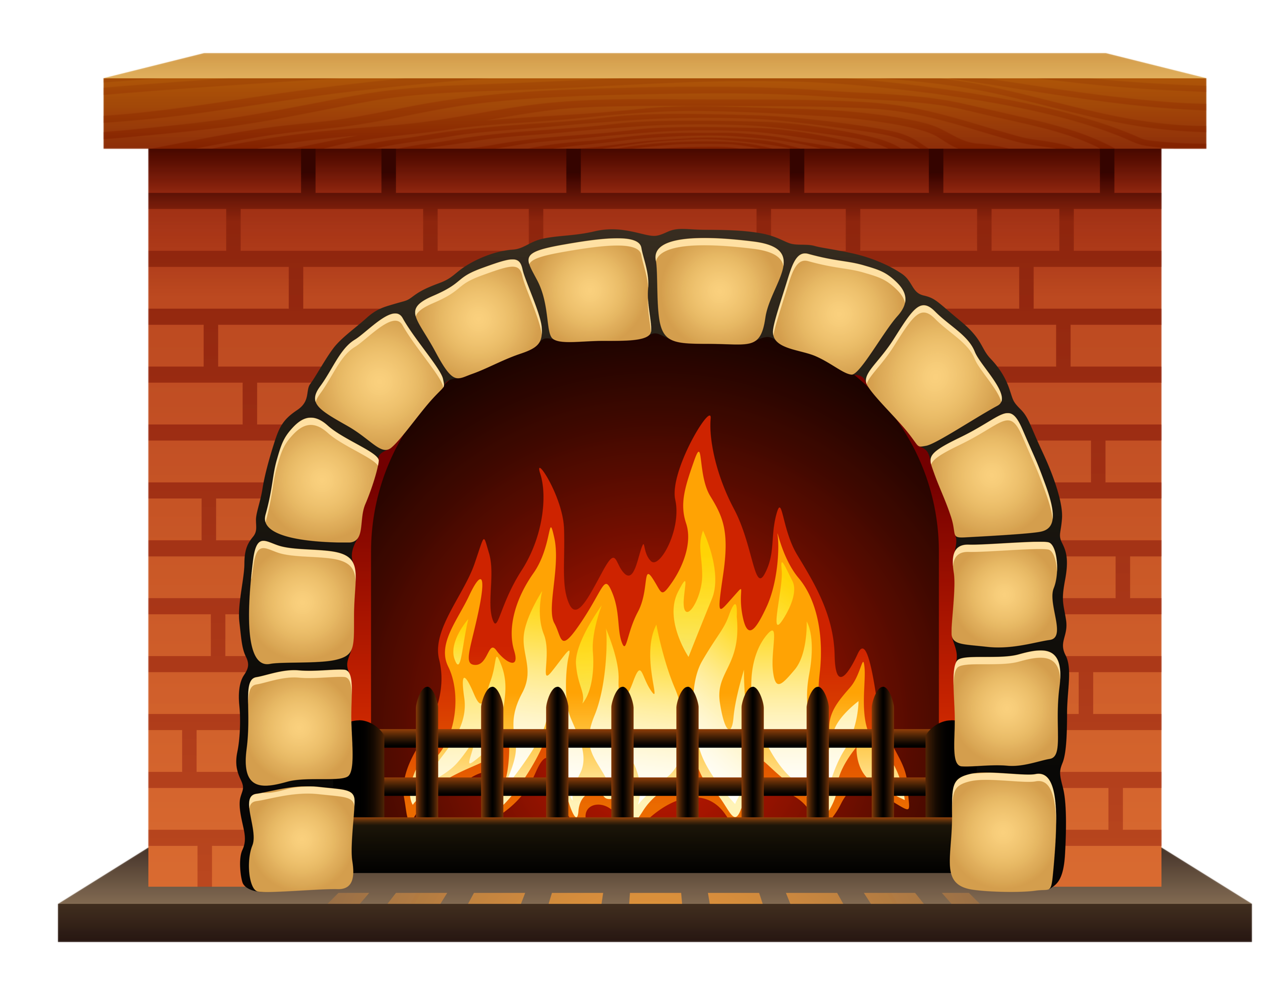 Printable Fireplace Bricks Tablet for Kids Reviews